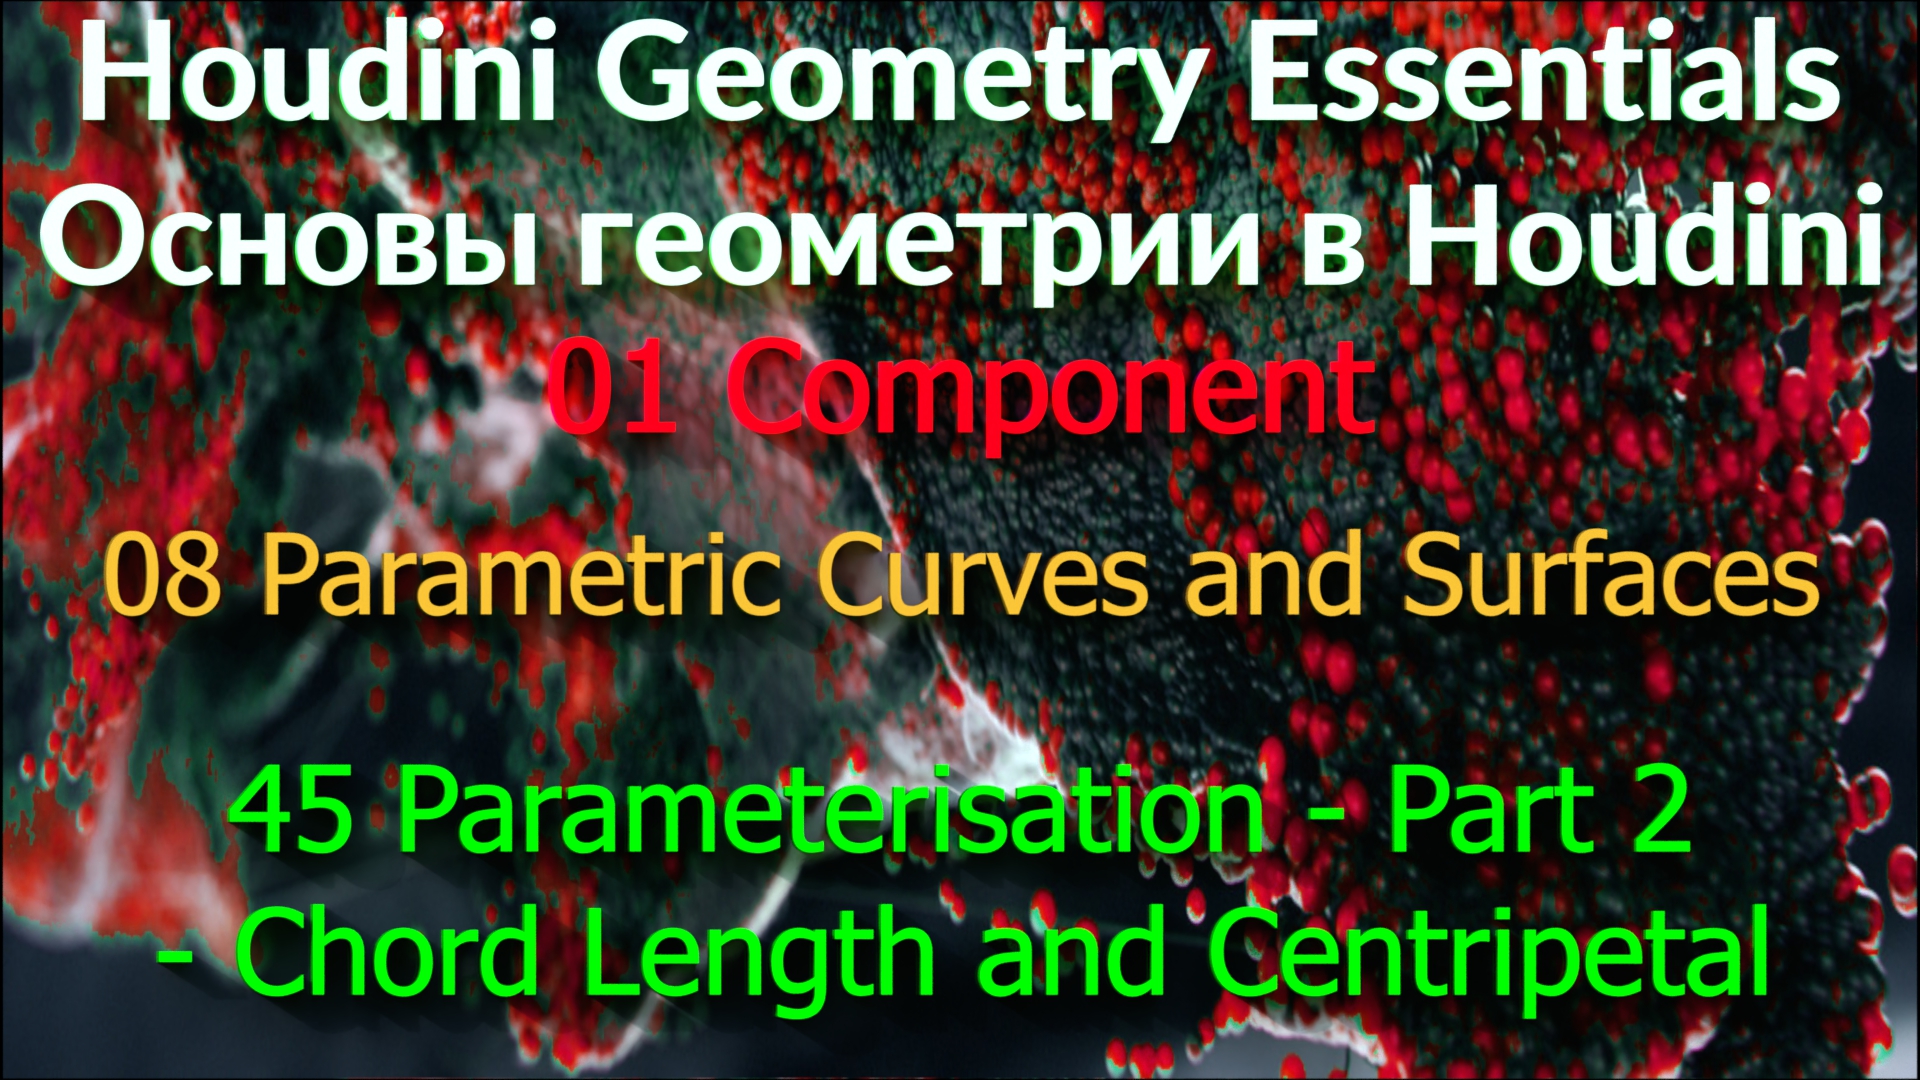 01_08_45. Parameterisation - Part 2 - Chord Length and Centripetal